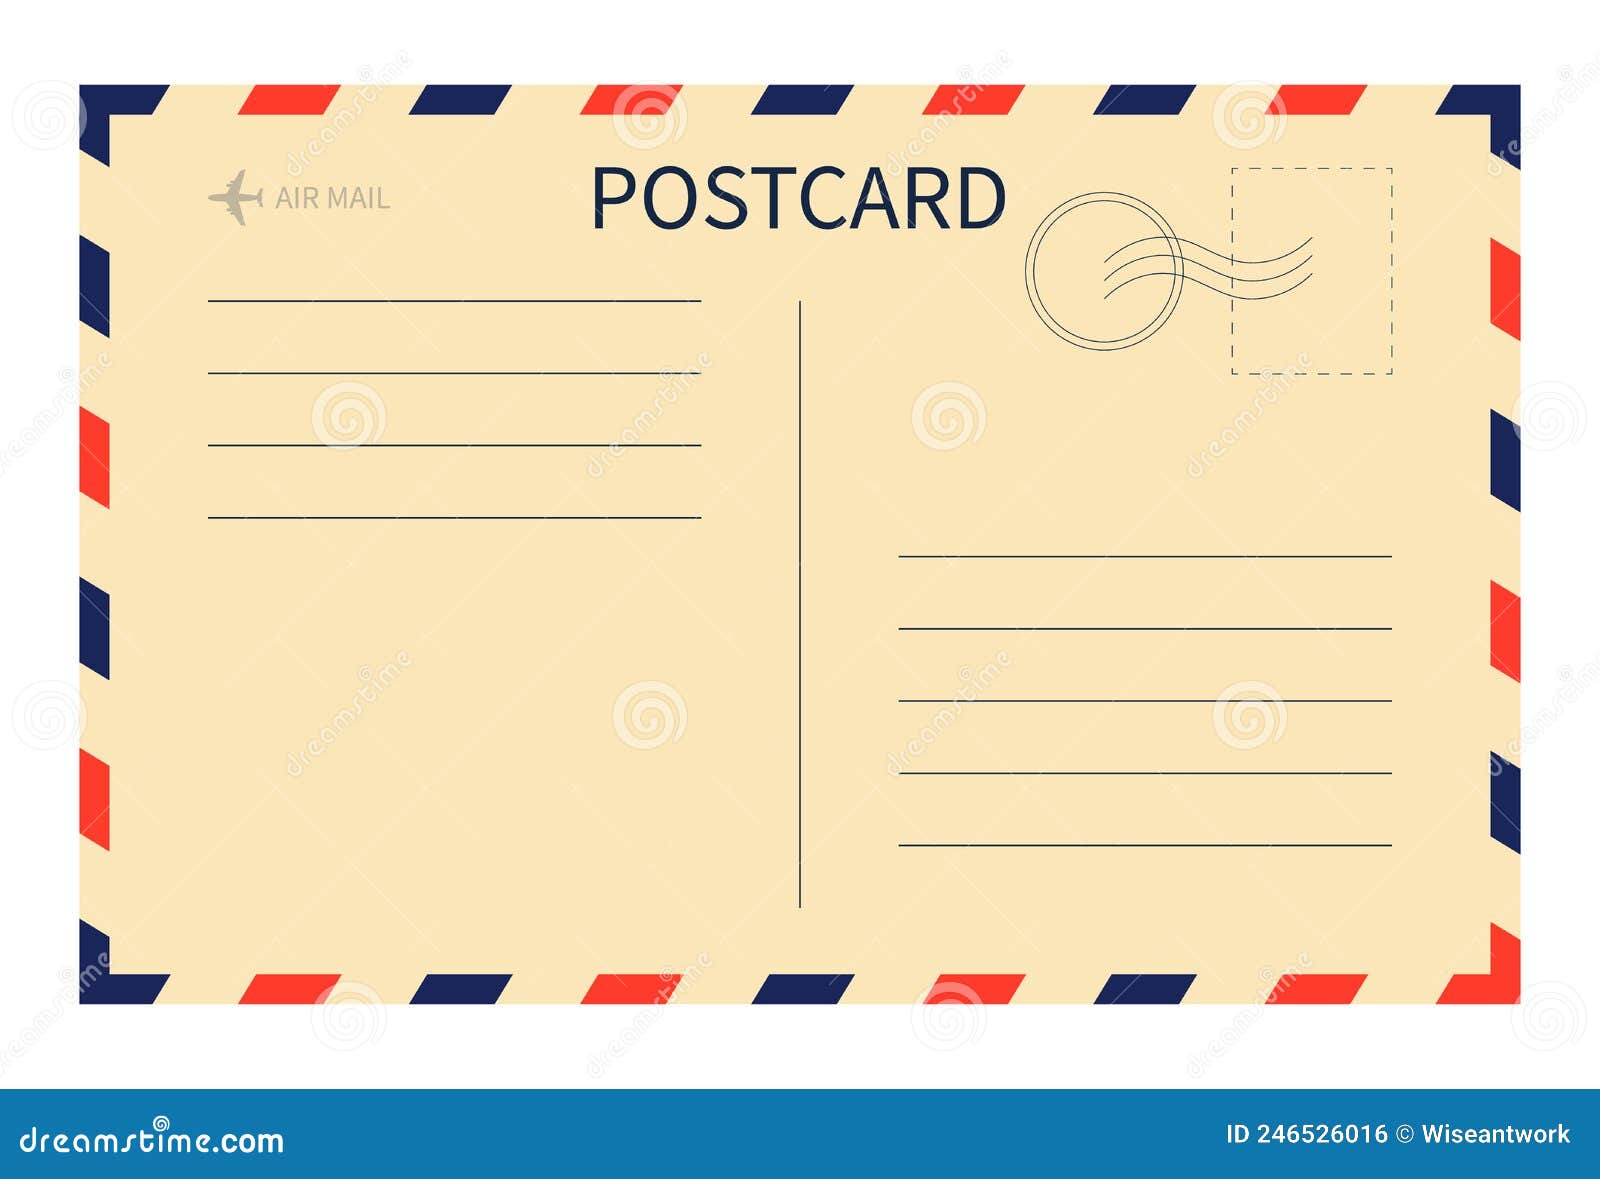 Postcard template paper blank postal card Vector Image